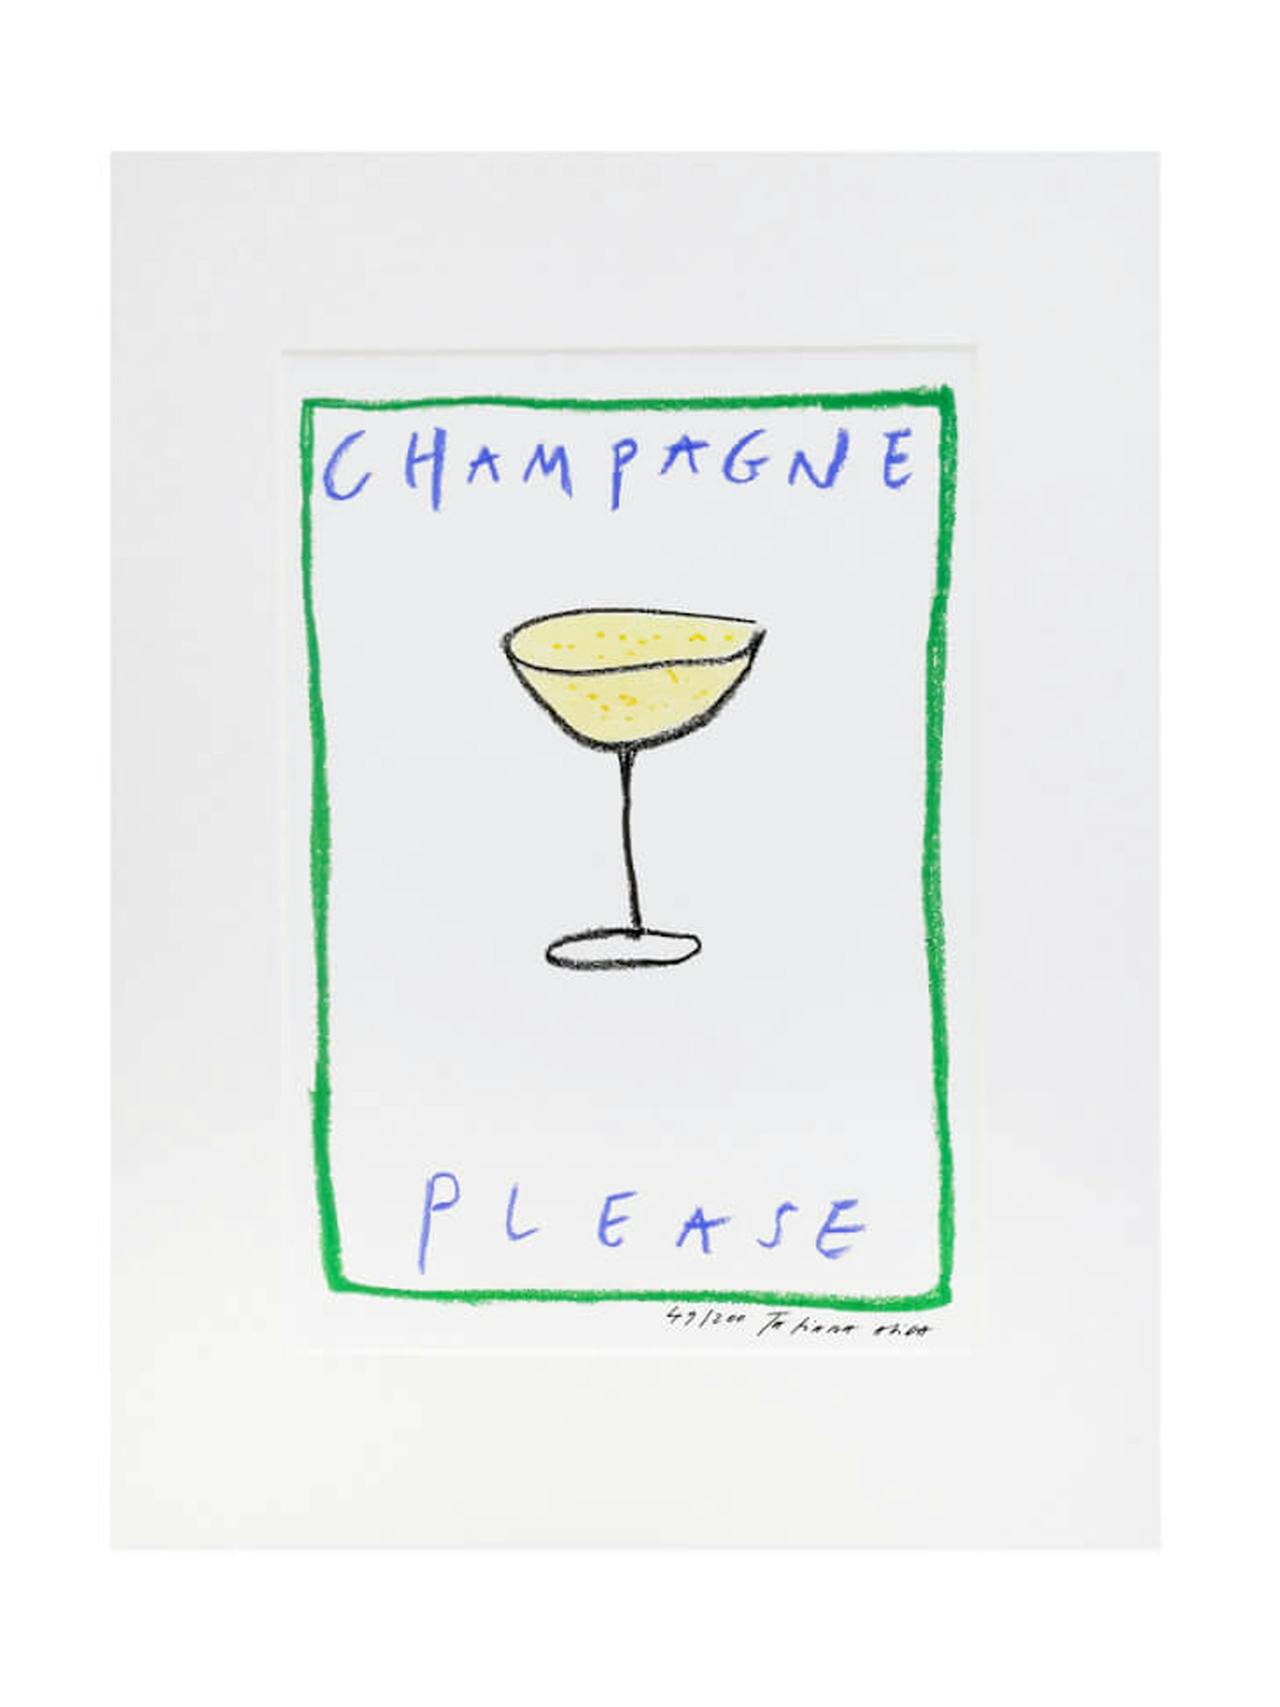 ‘Champagne Please’ print